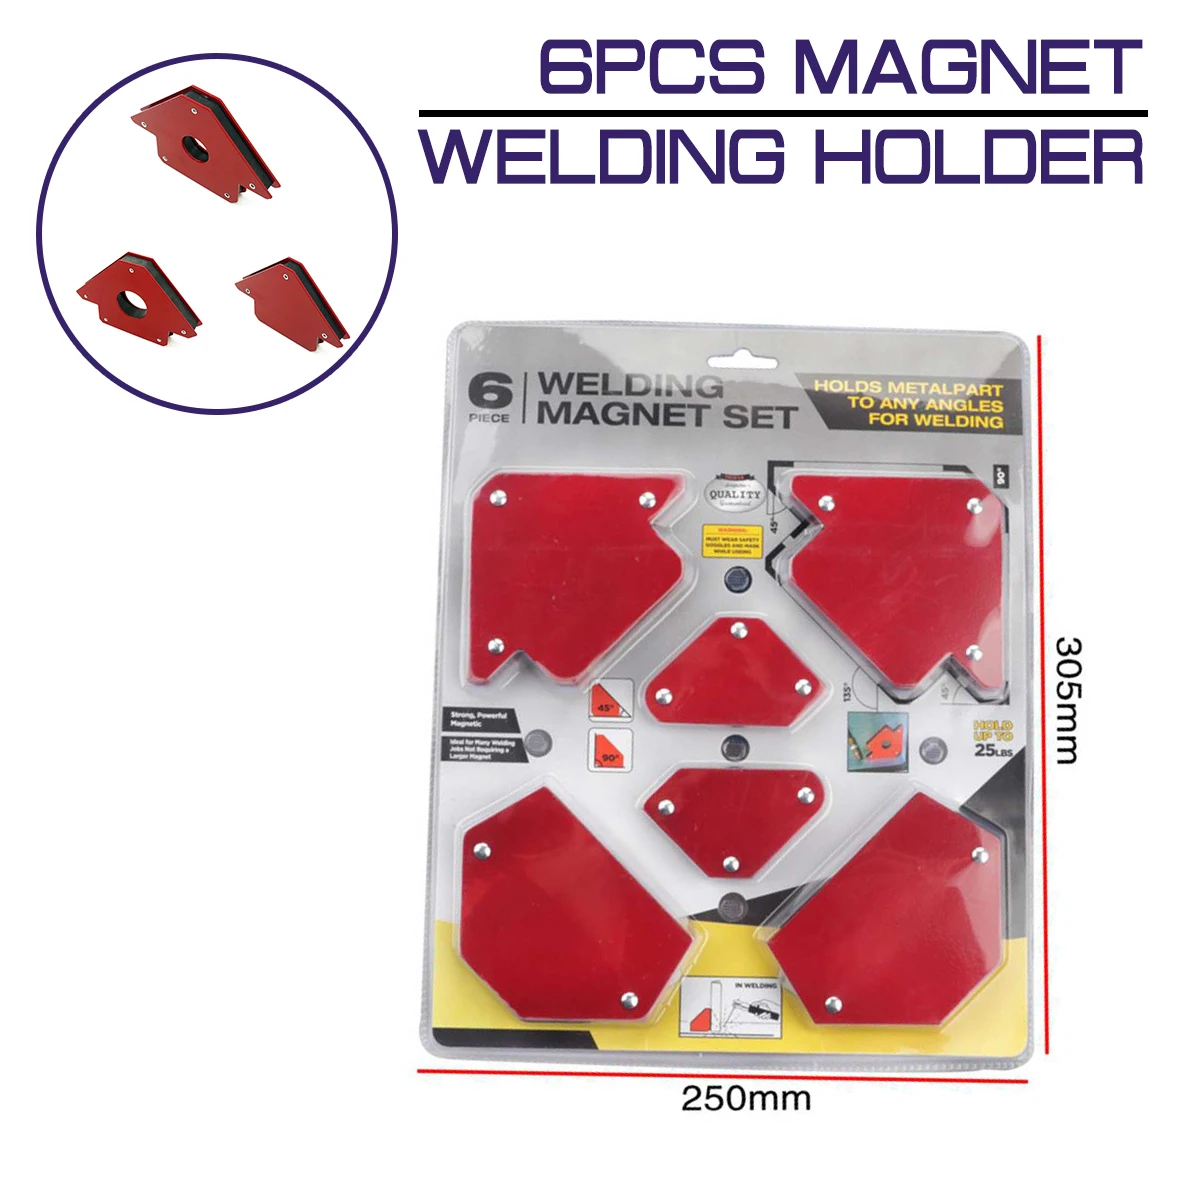 

6pcs Magnet Welding Holder Arrow Multi-angle Magnetic Clamp for Welding Magnet 2x 50lbs 2x 25lbs 2x 75lbs Mig Tools